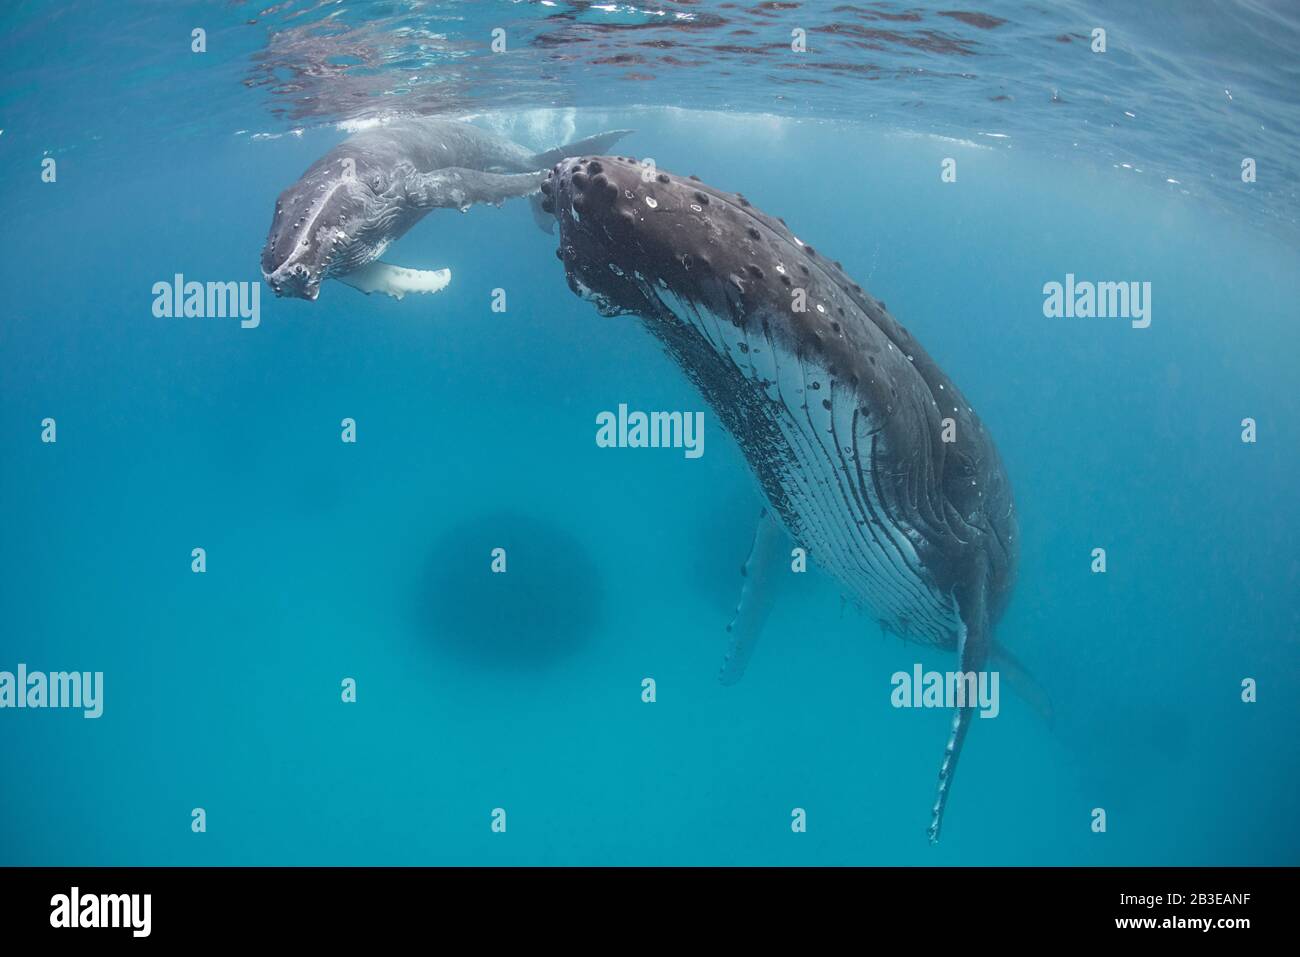 Madre y becerro de ballena jorobada, Megaptera novaeangliae, cerca de la isla de Nombruka, grupo ha'apai, Reino de Tonga, Pacífico Sur Foto de stock